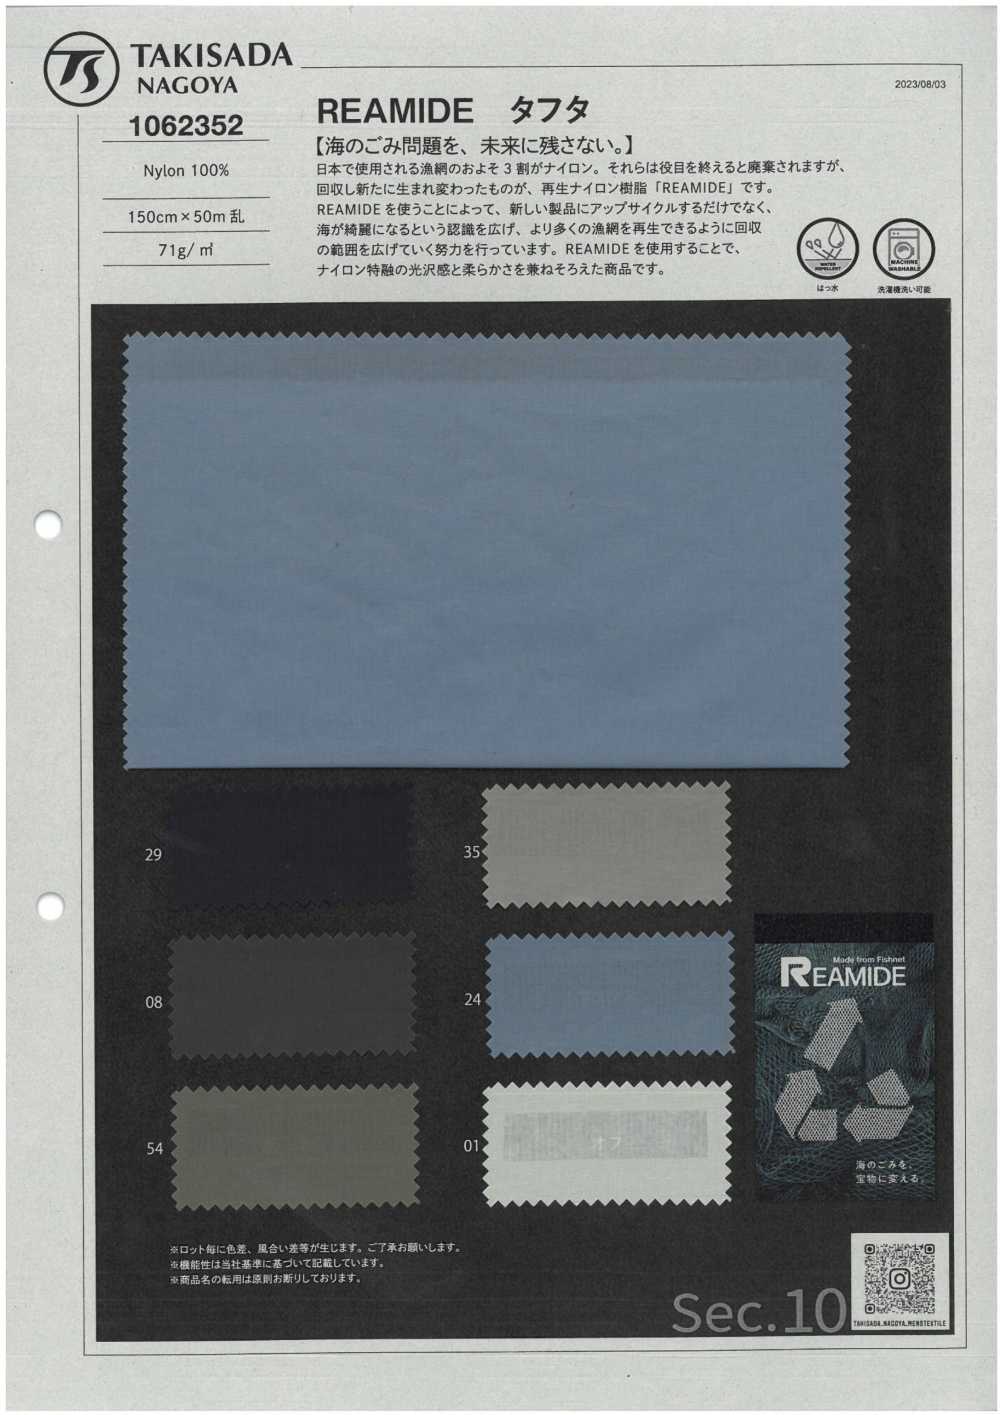 1062352 REAMIDE Taft[Textilgewebe] Takisada Nagoya